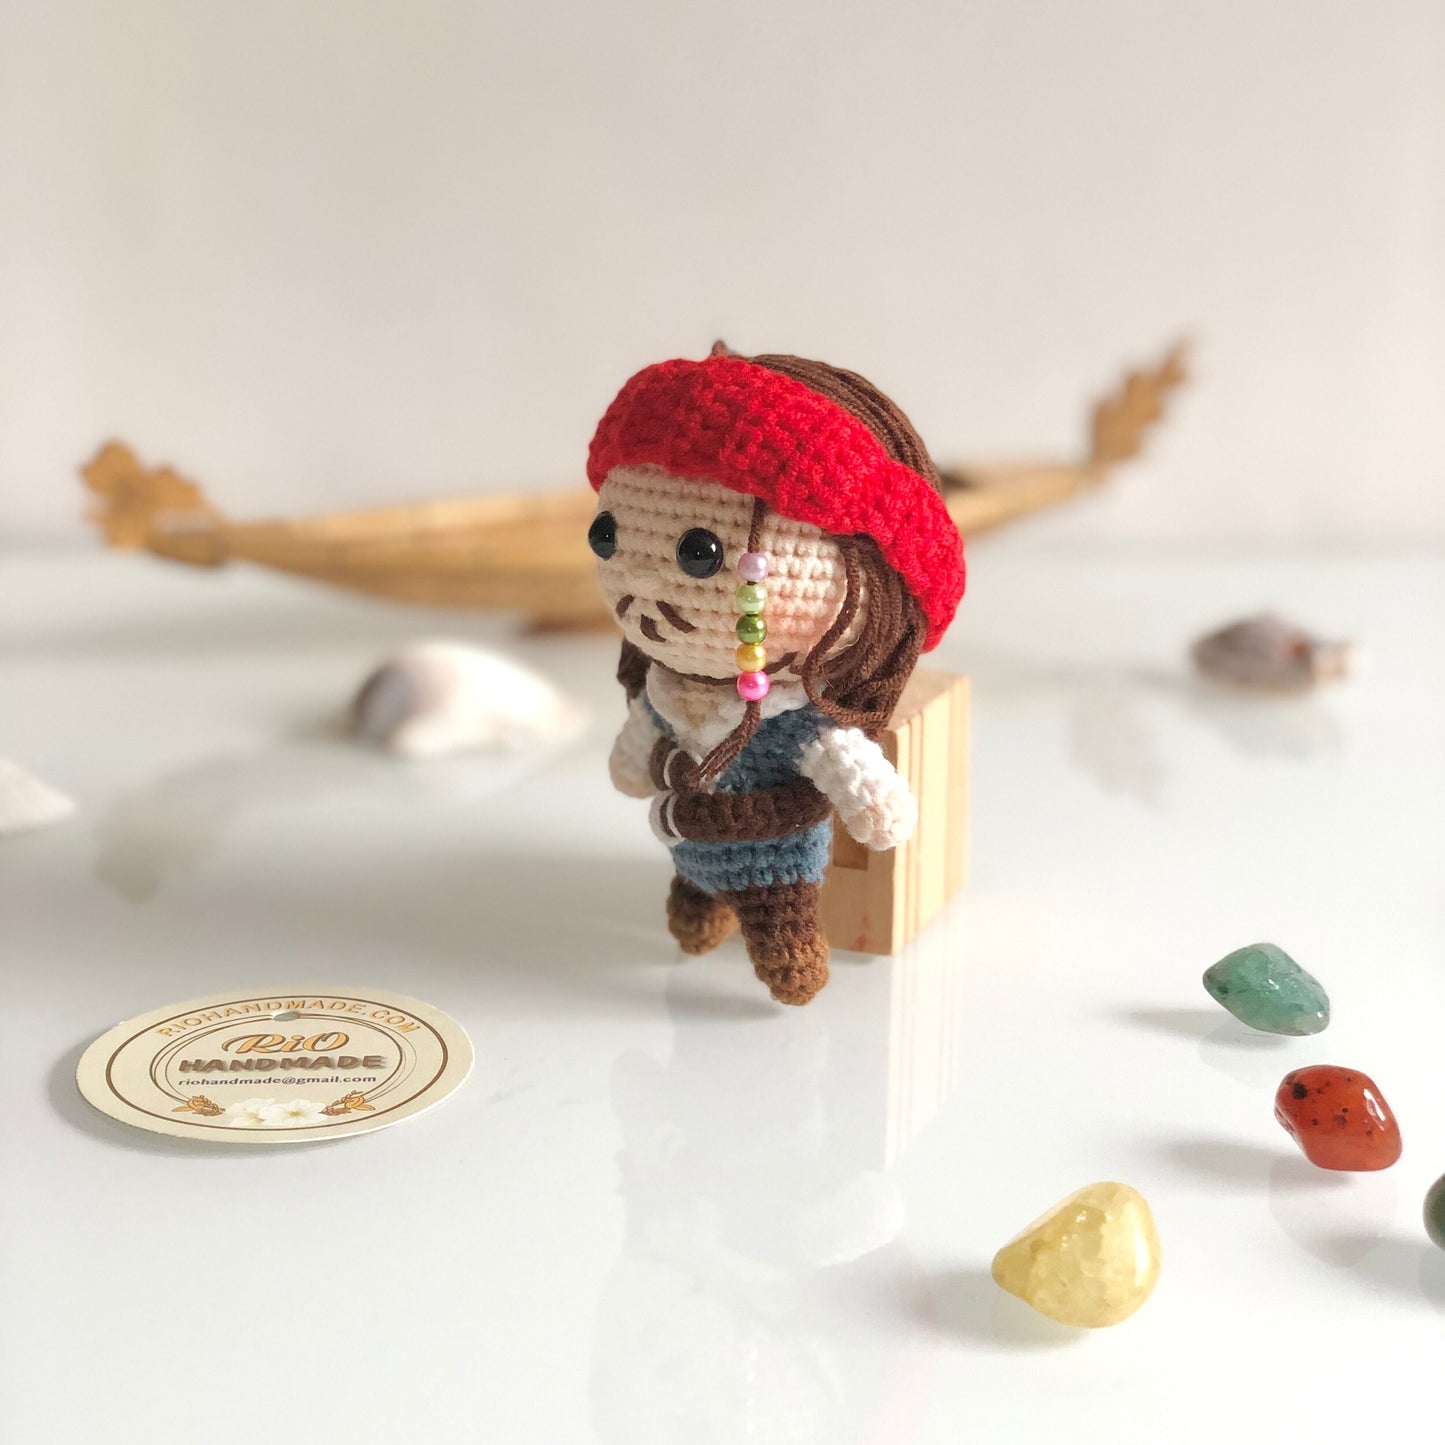 Handmade Jack Sparrow inspired , Crochet Jack Sparrow Inspired, Crochet Pirates of the Caribbean, car rearview mirror charm, gift